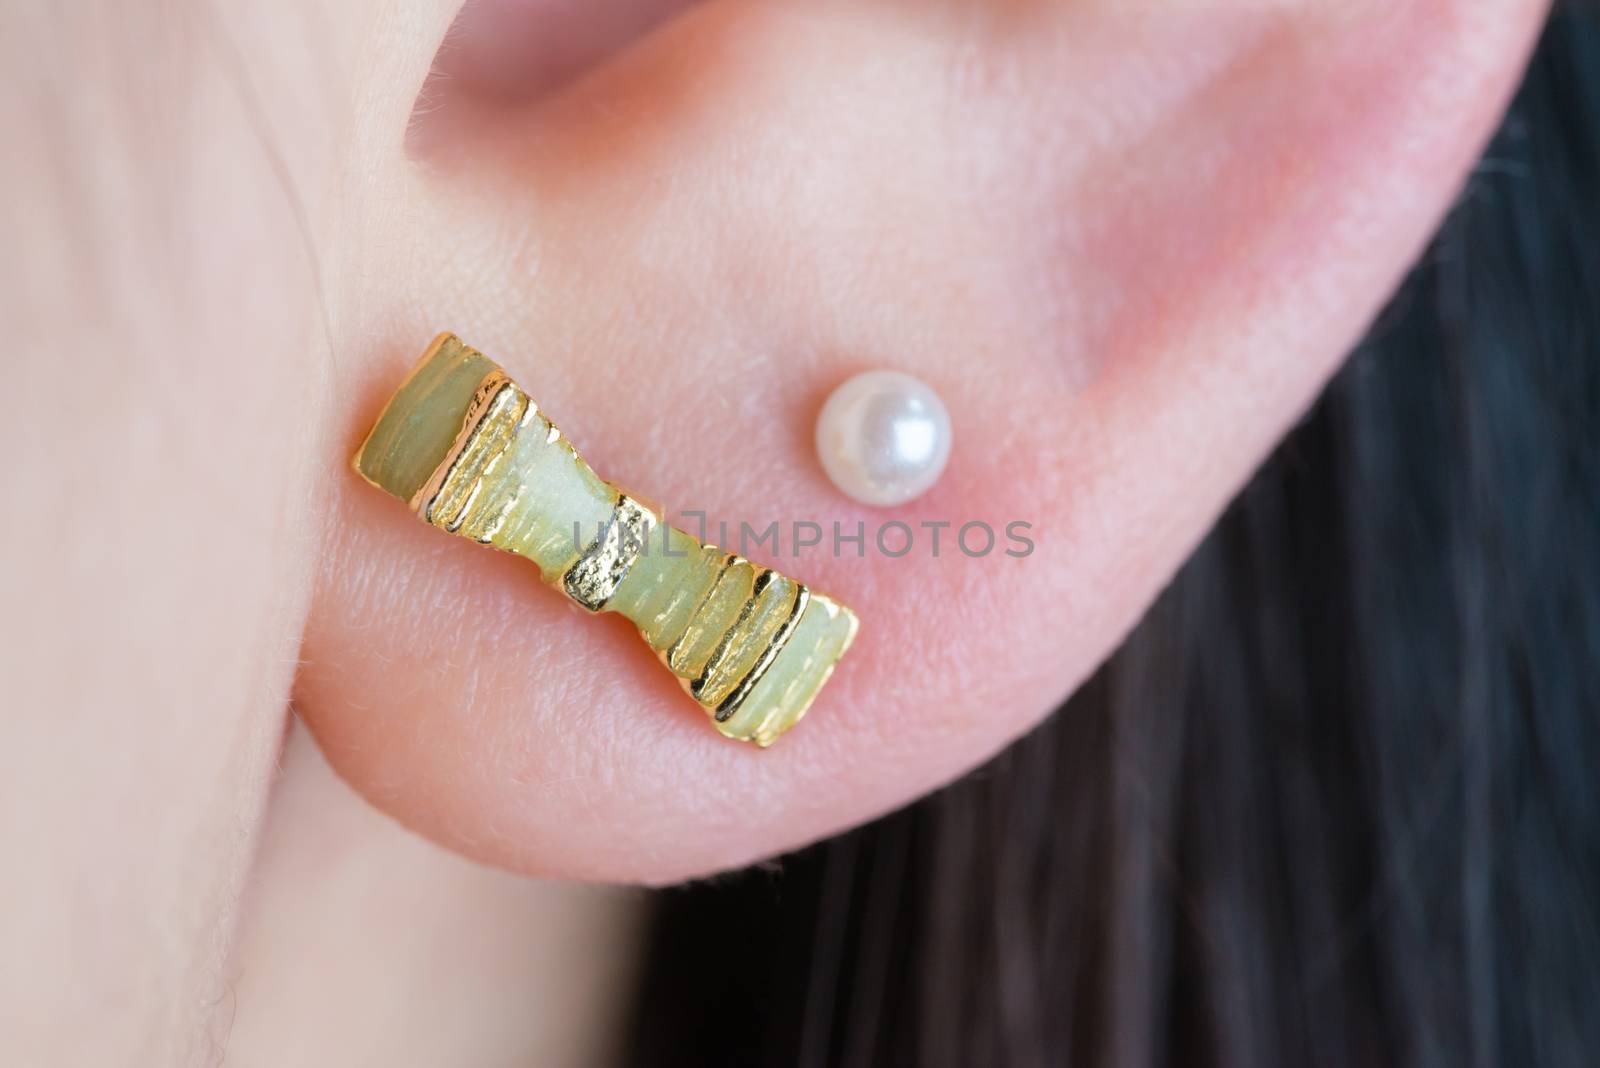 A macro shot of a green ribbon earring and white pearl earring in a girl's ear.